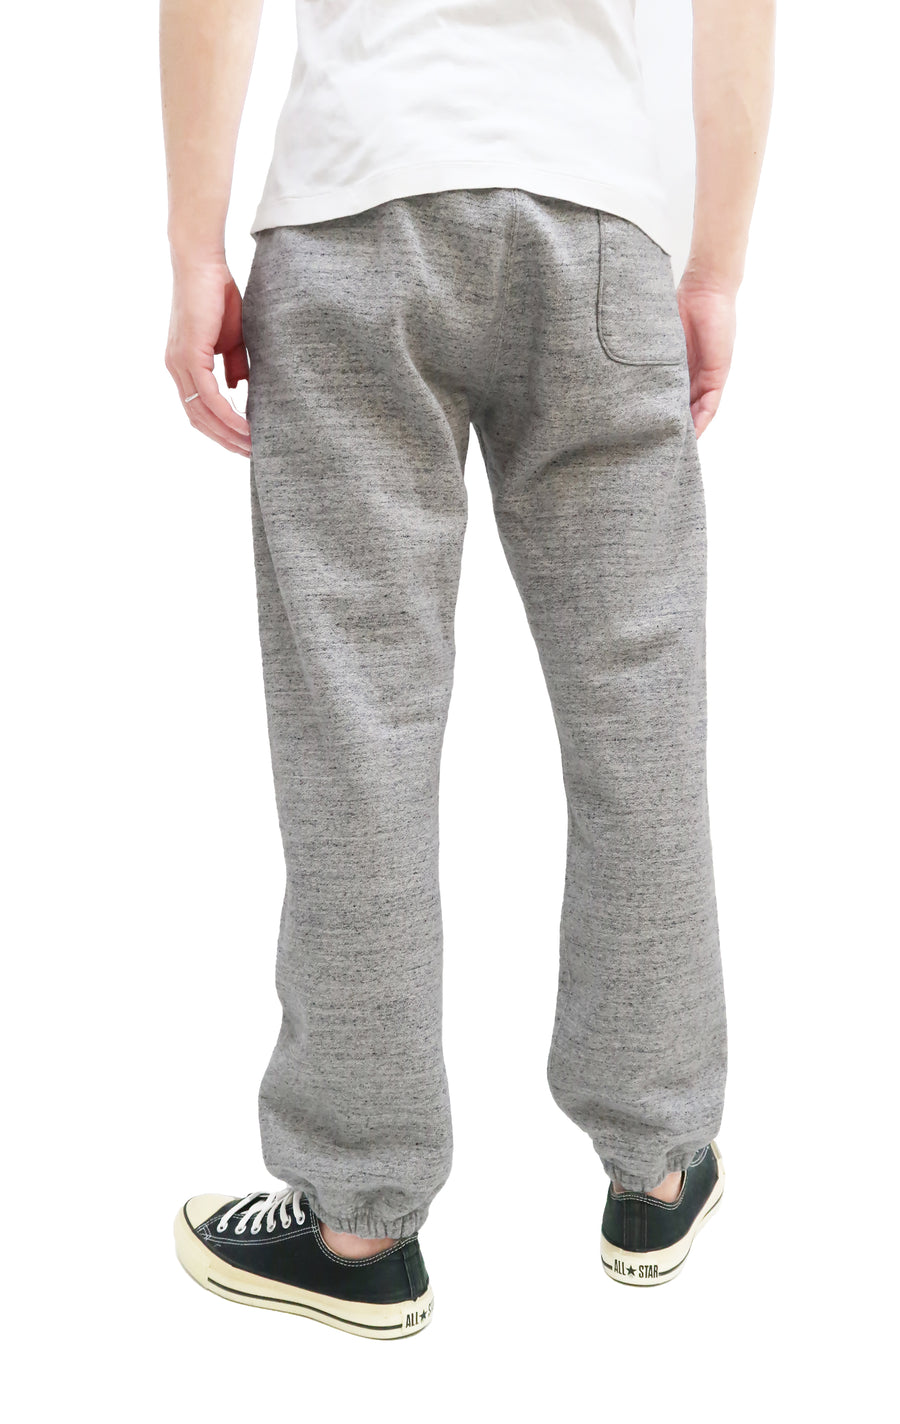 Whitesville Sweatpants Men's Drawstring Waist Sweatpants with Elastic Cuff WV49036 113 Heather-Gray